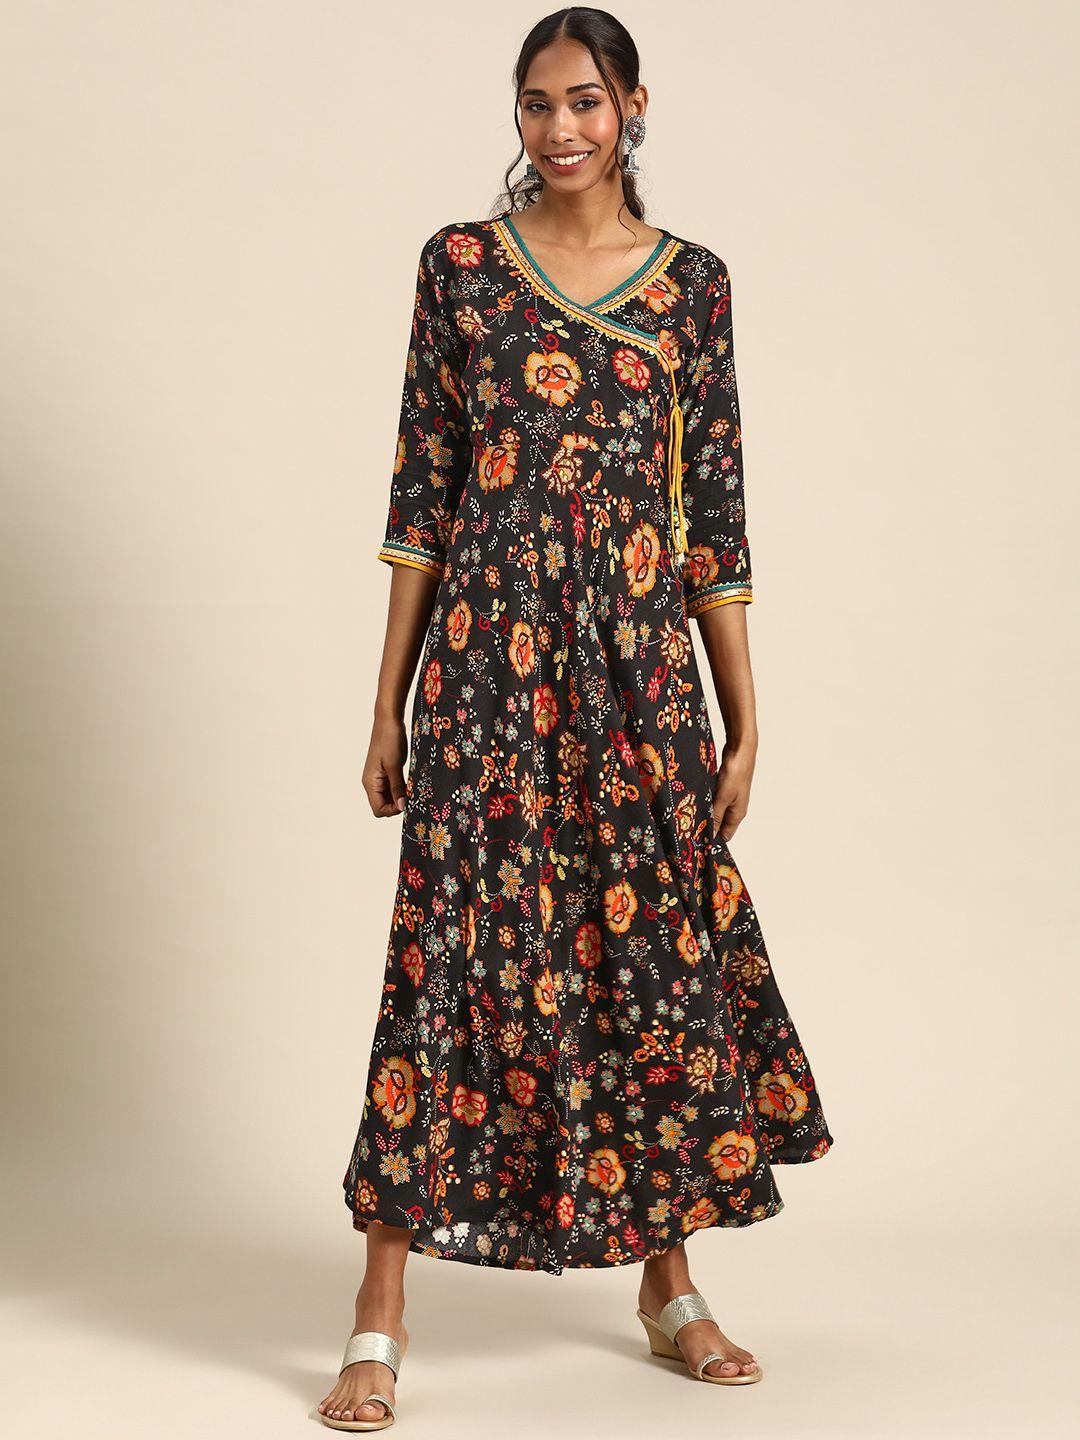 rangmayee black & yellow floral liva ethnic a-line maxi dress